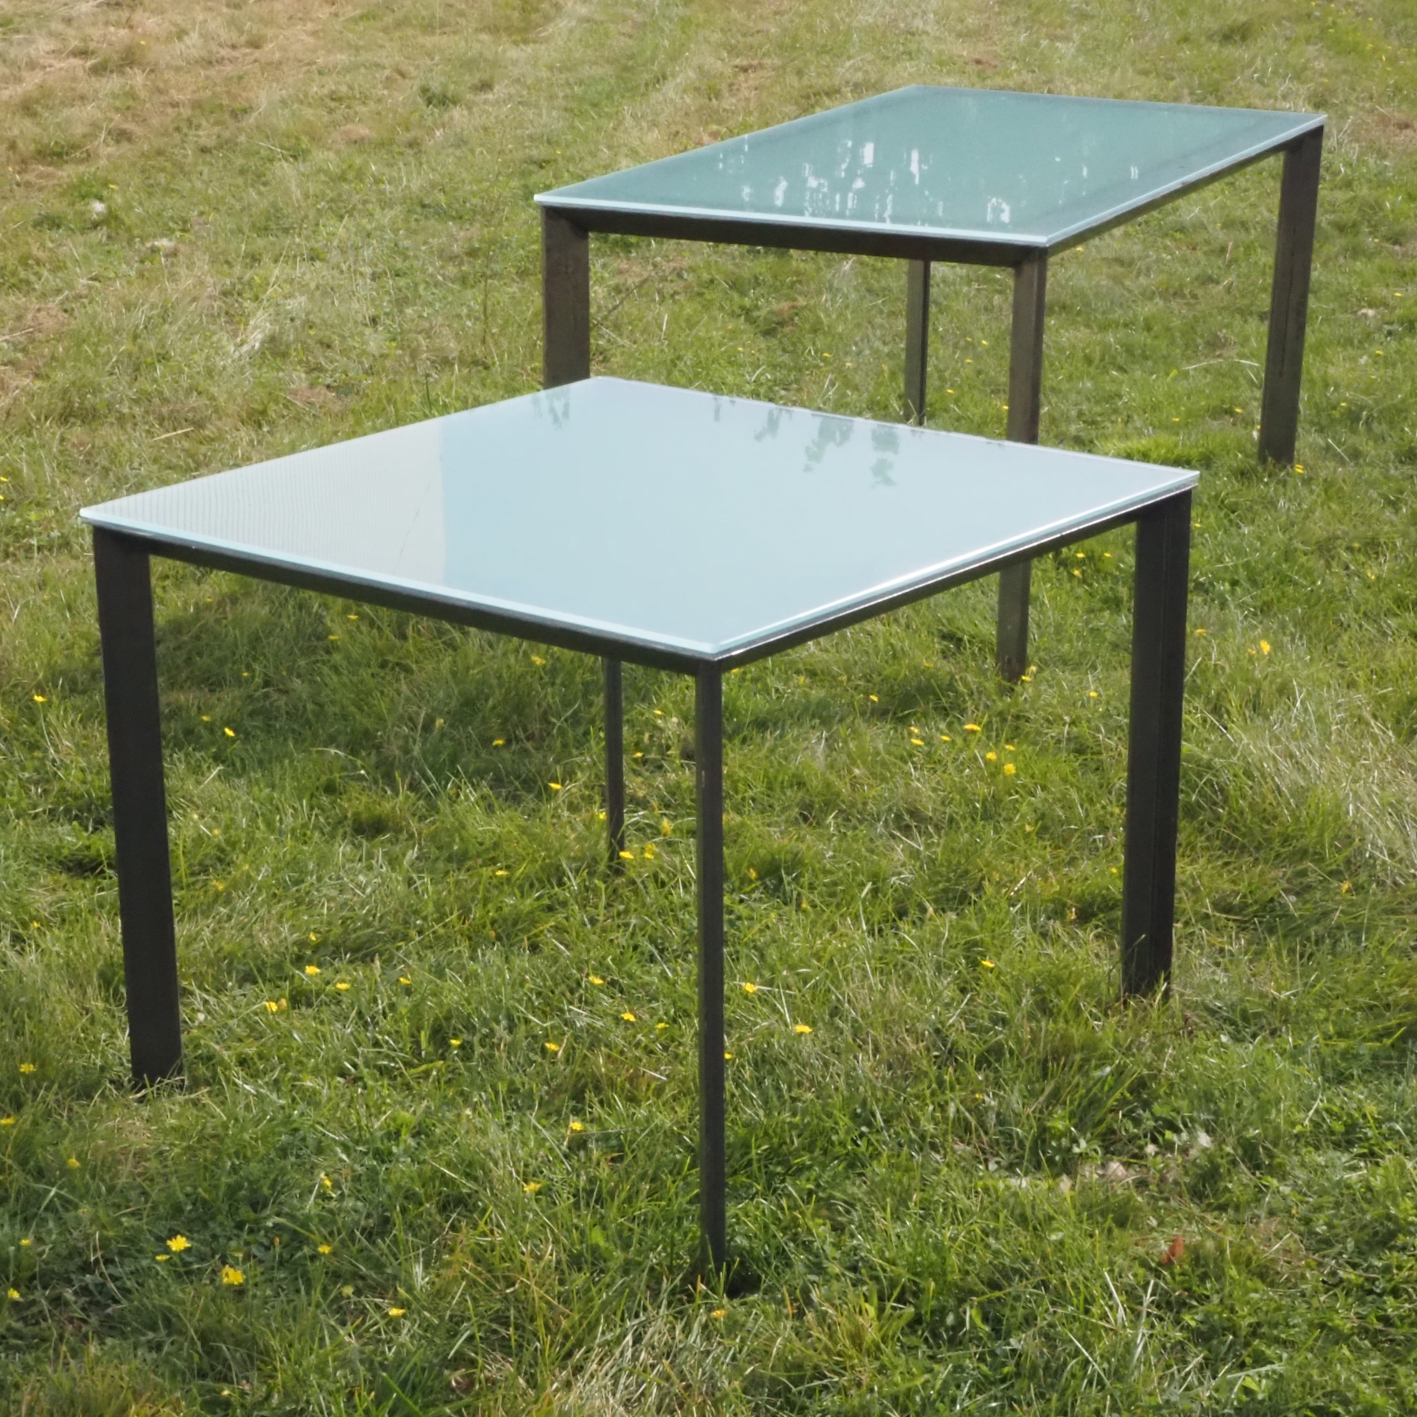 Table by Odile Decq (180 x 90 cm)